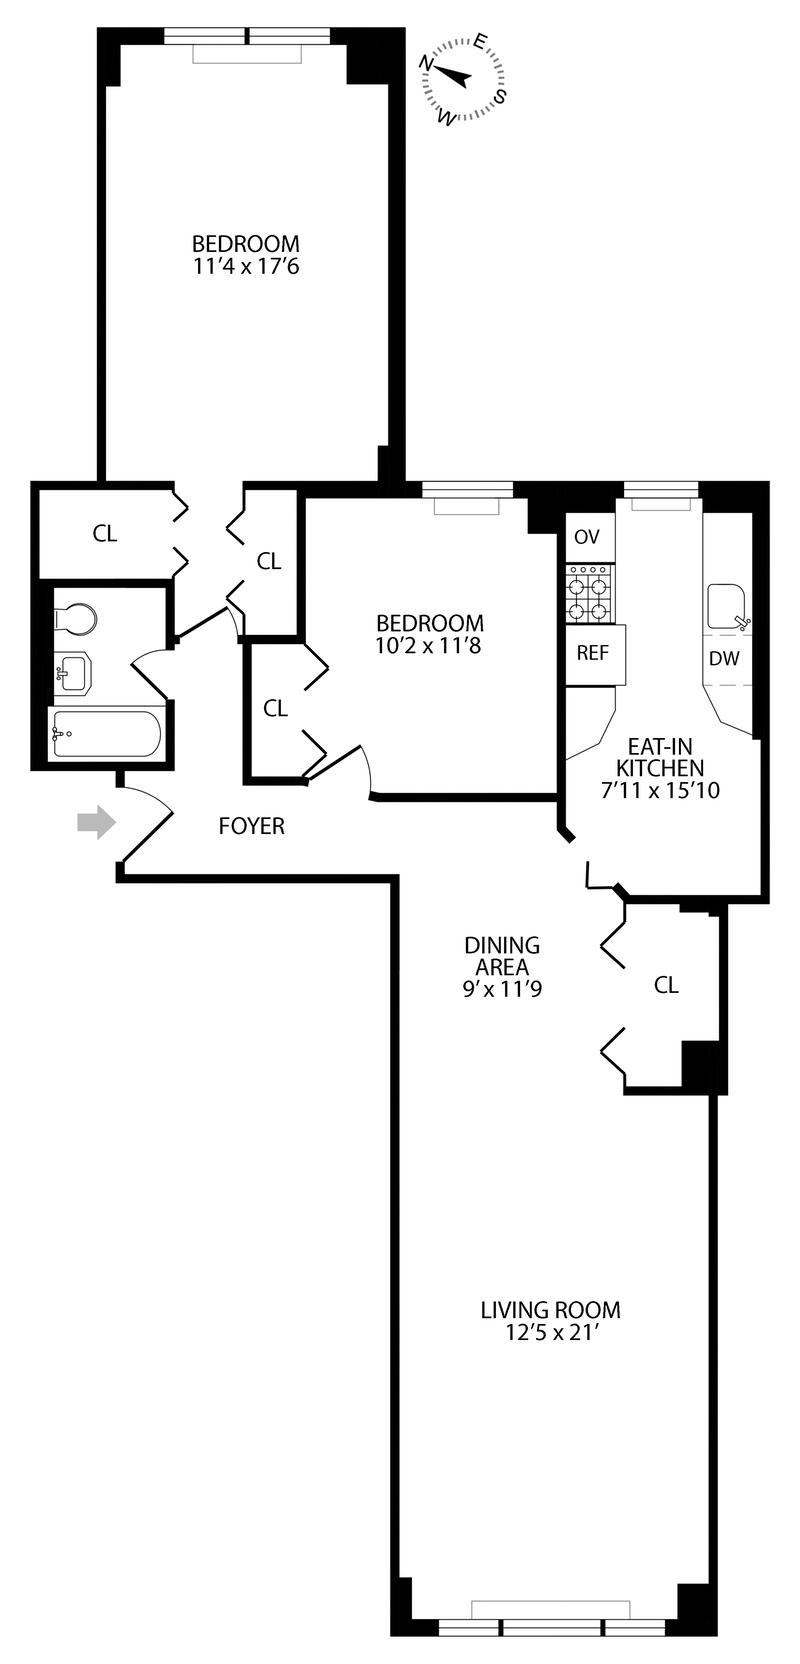 Floorplan for 1655 Flatbush Ave, A1402